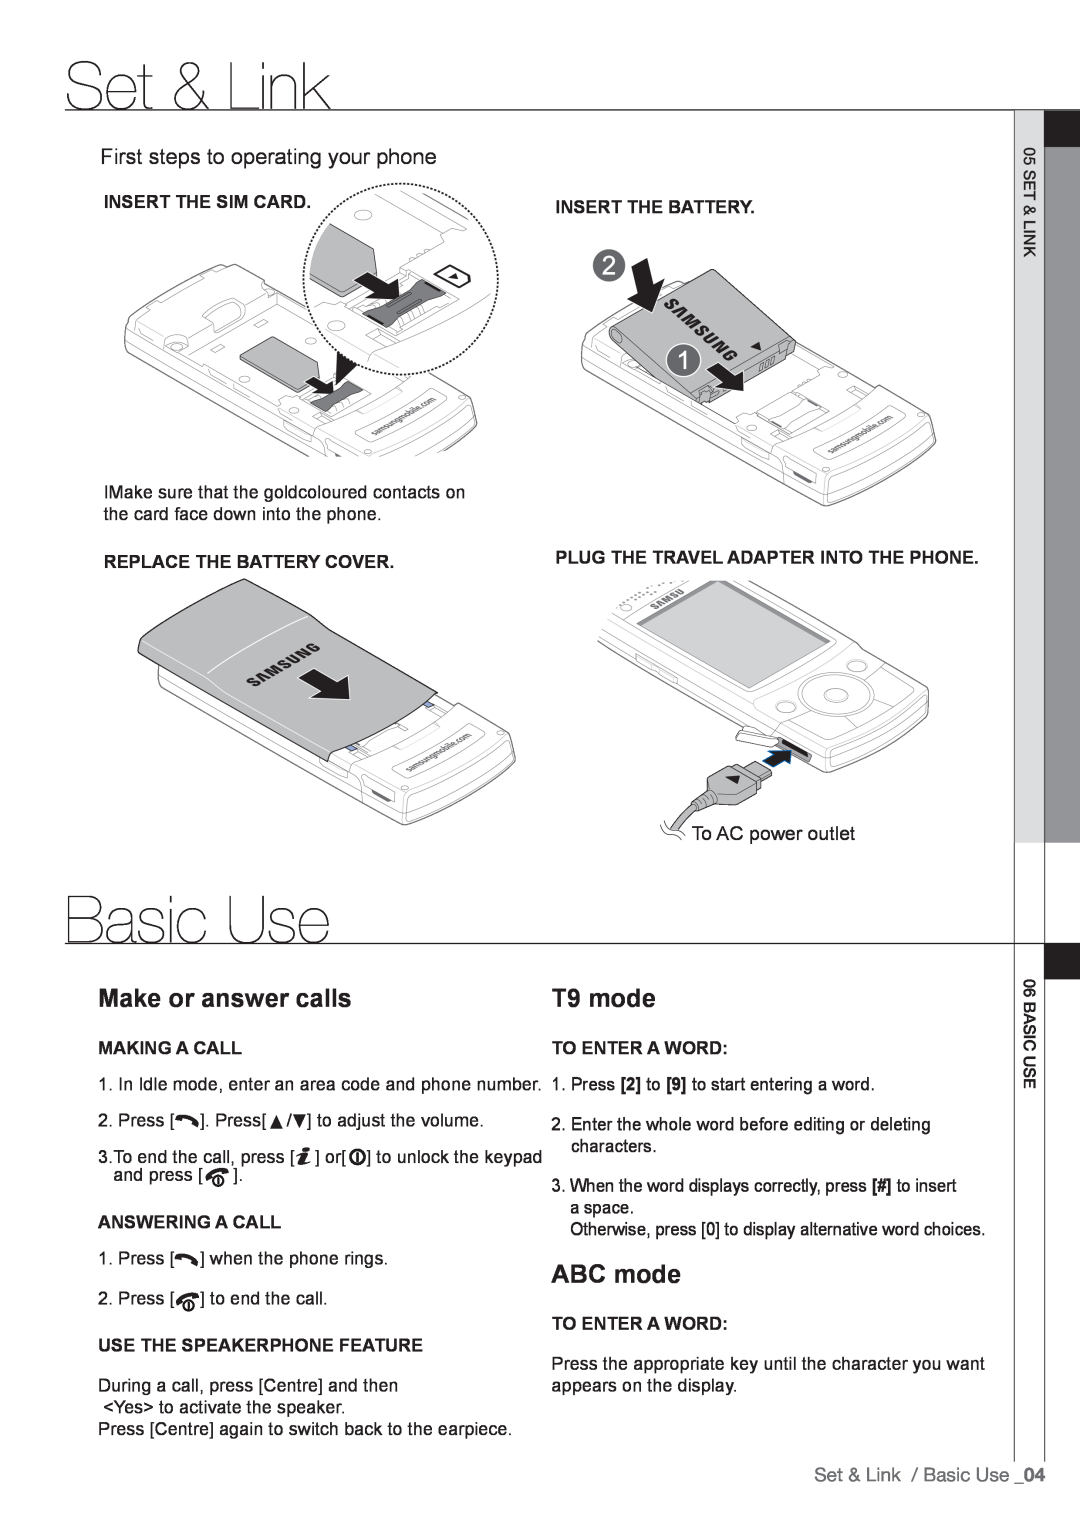 Samsung SGH-G600 Set & Link / Basic Use, Insert the SIM card, Insert the battery, Replace the battery cover, T9 mode 